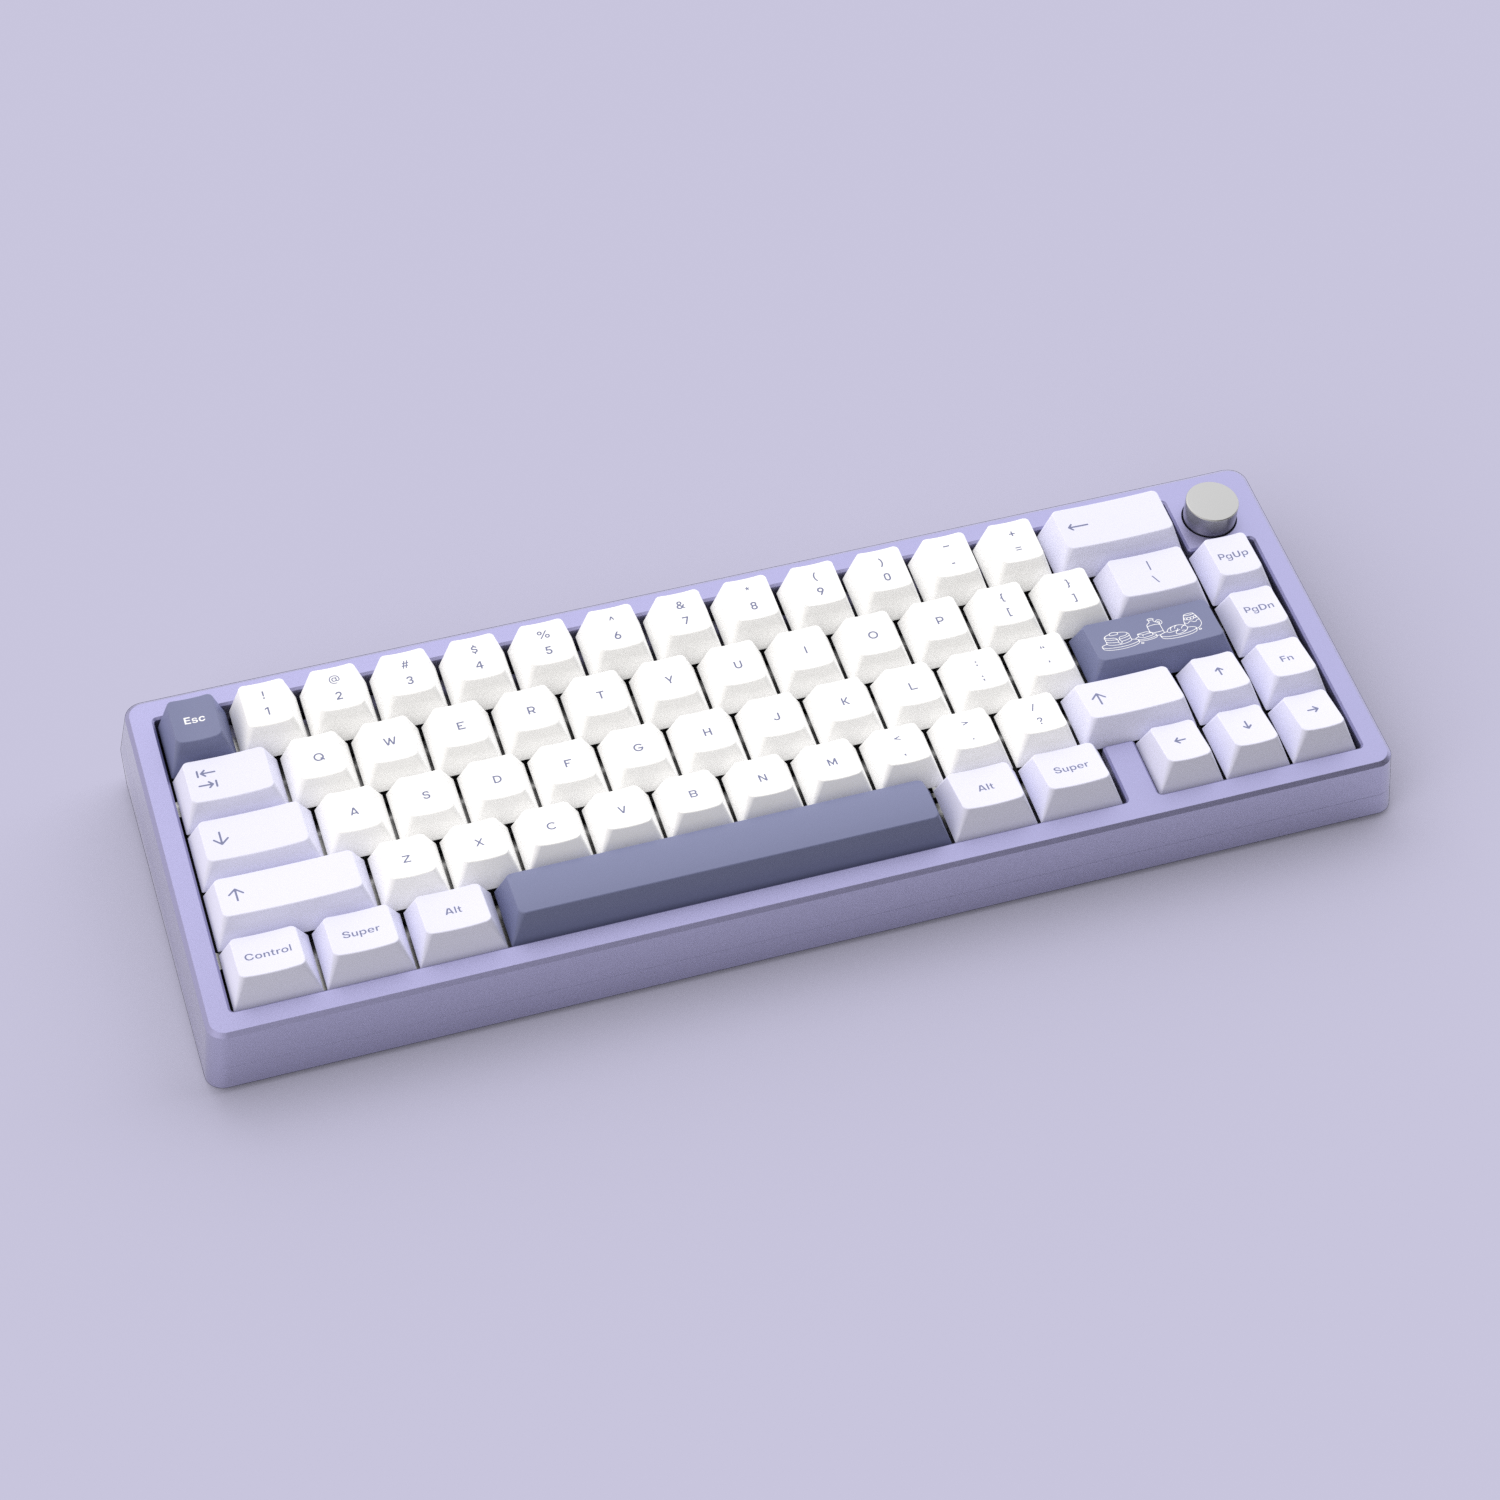 RENDER: Teacaps Parfait keycaps on a lavender Zoom65 keyboard.